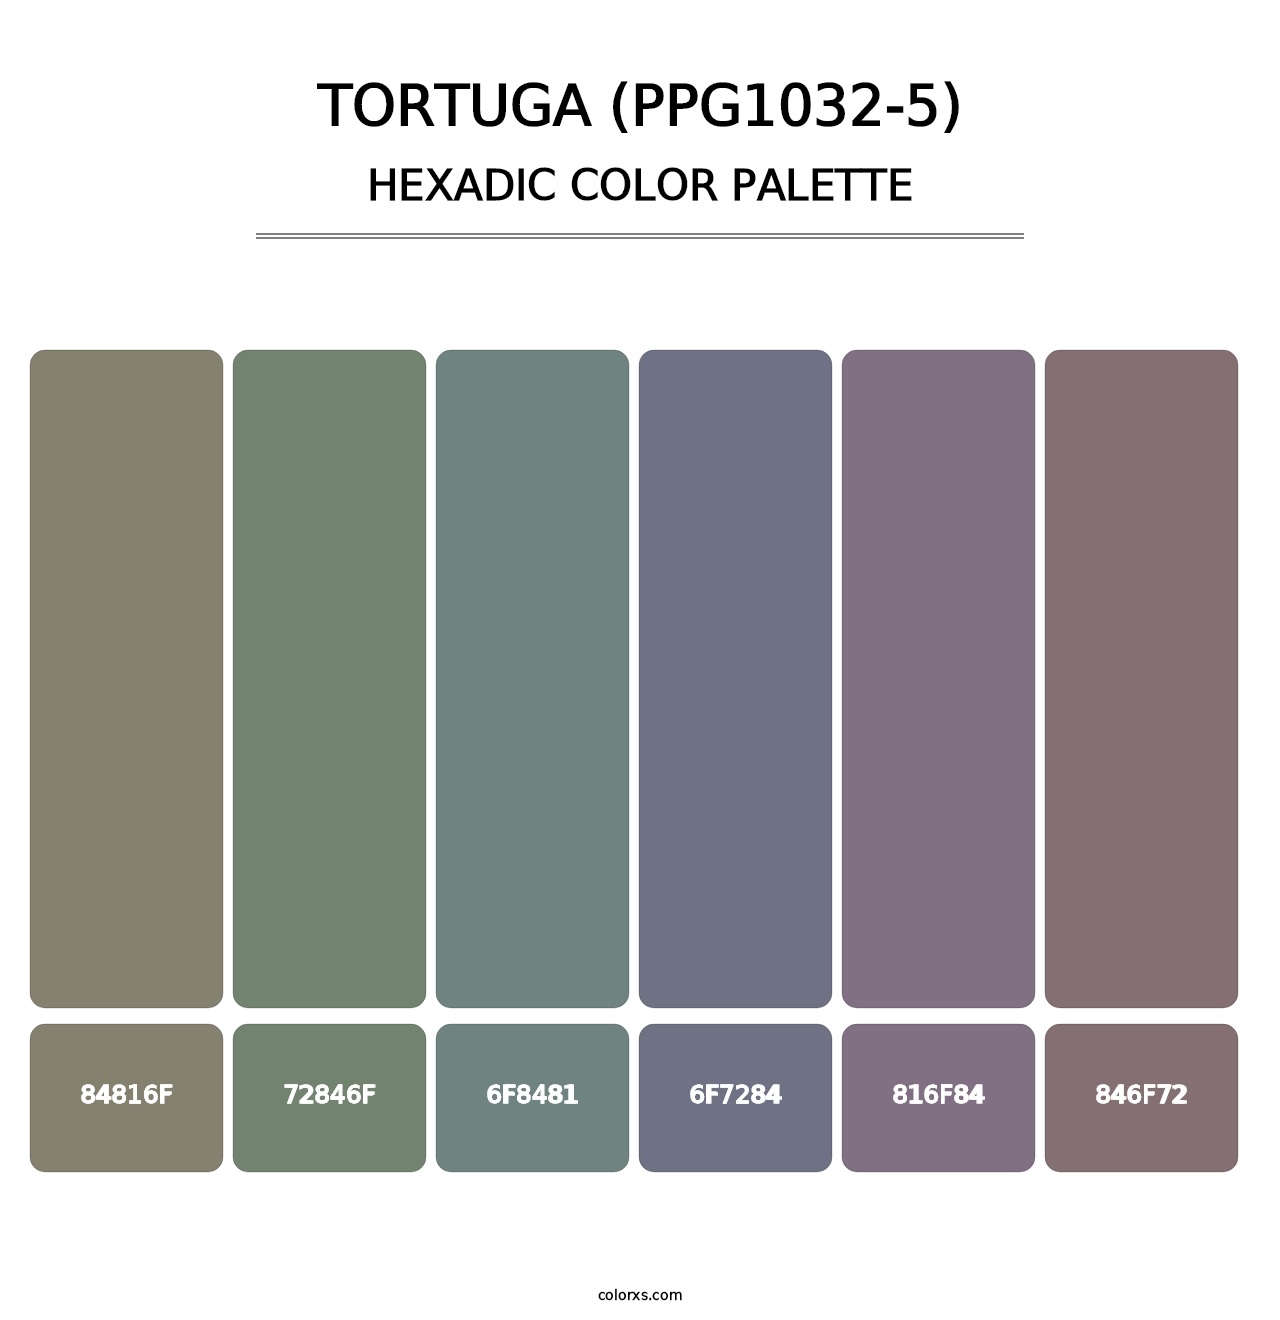 Tortuga (PPG1032-5) - Hexadic Color Palette